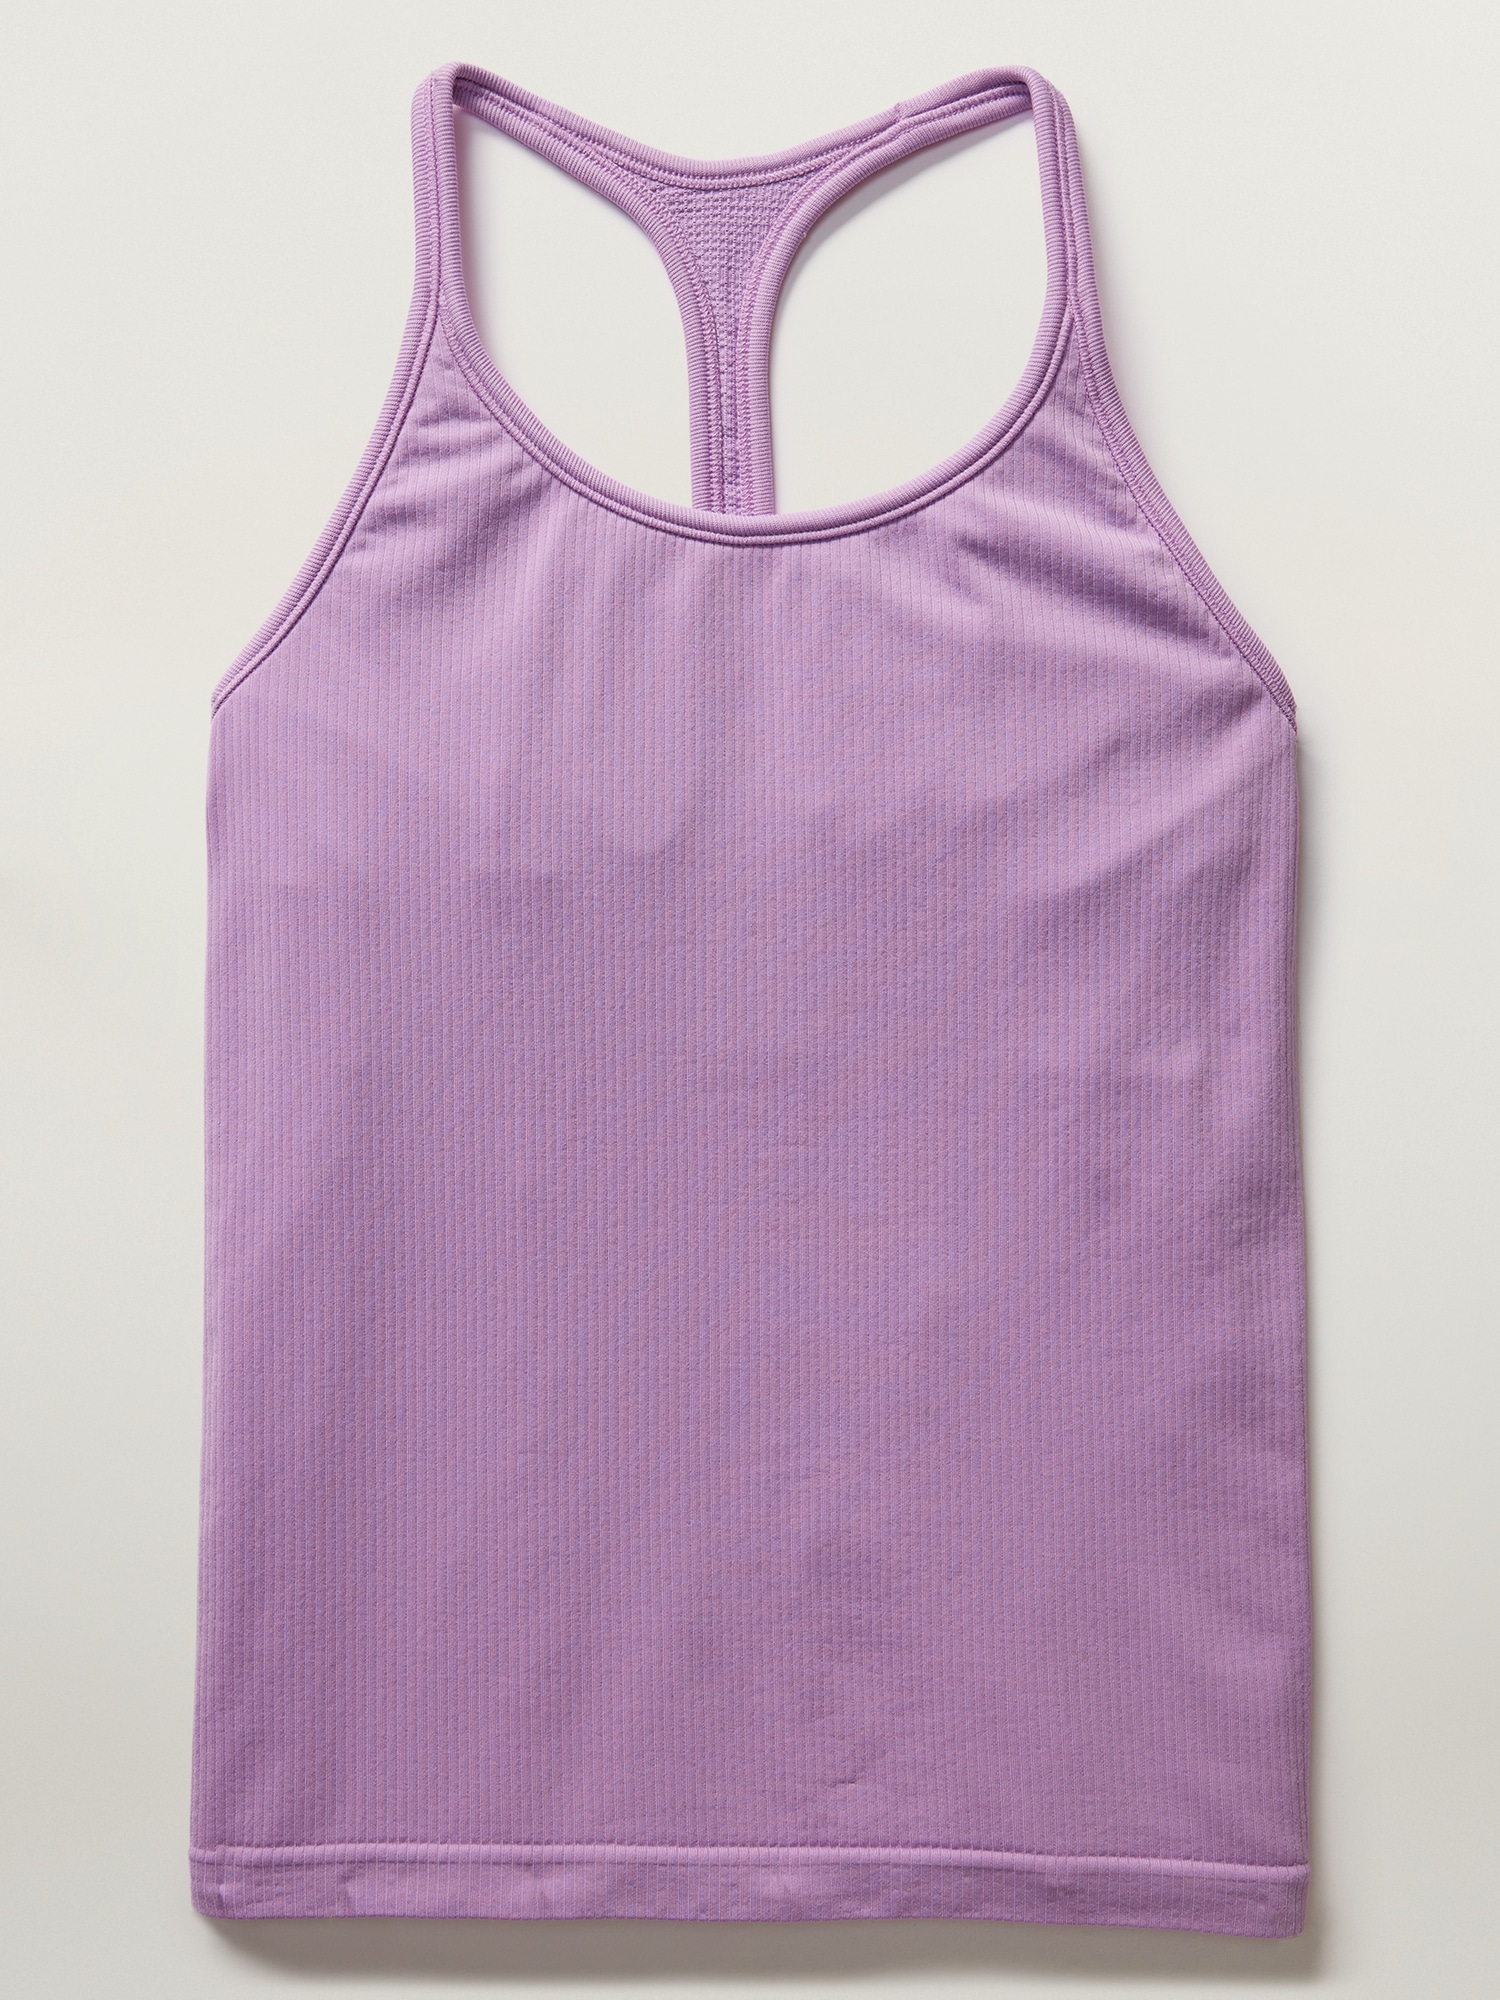 Athleta - Purple Tank top w Shelf Bra on Designer Wardrobe